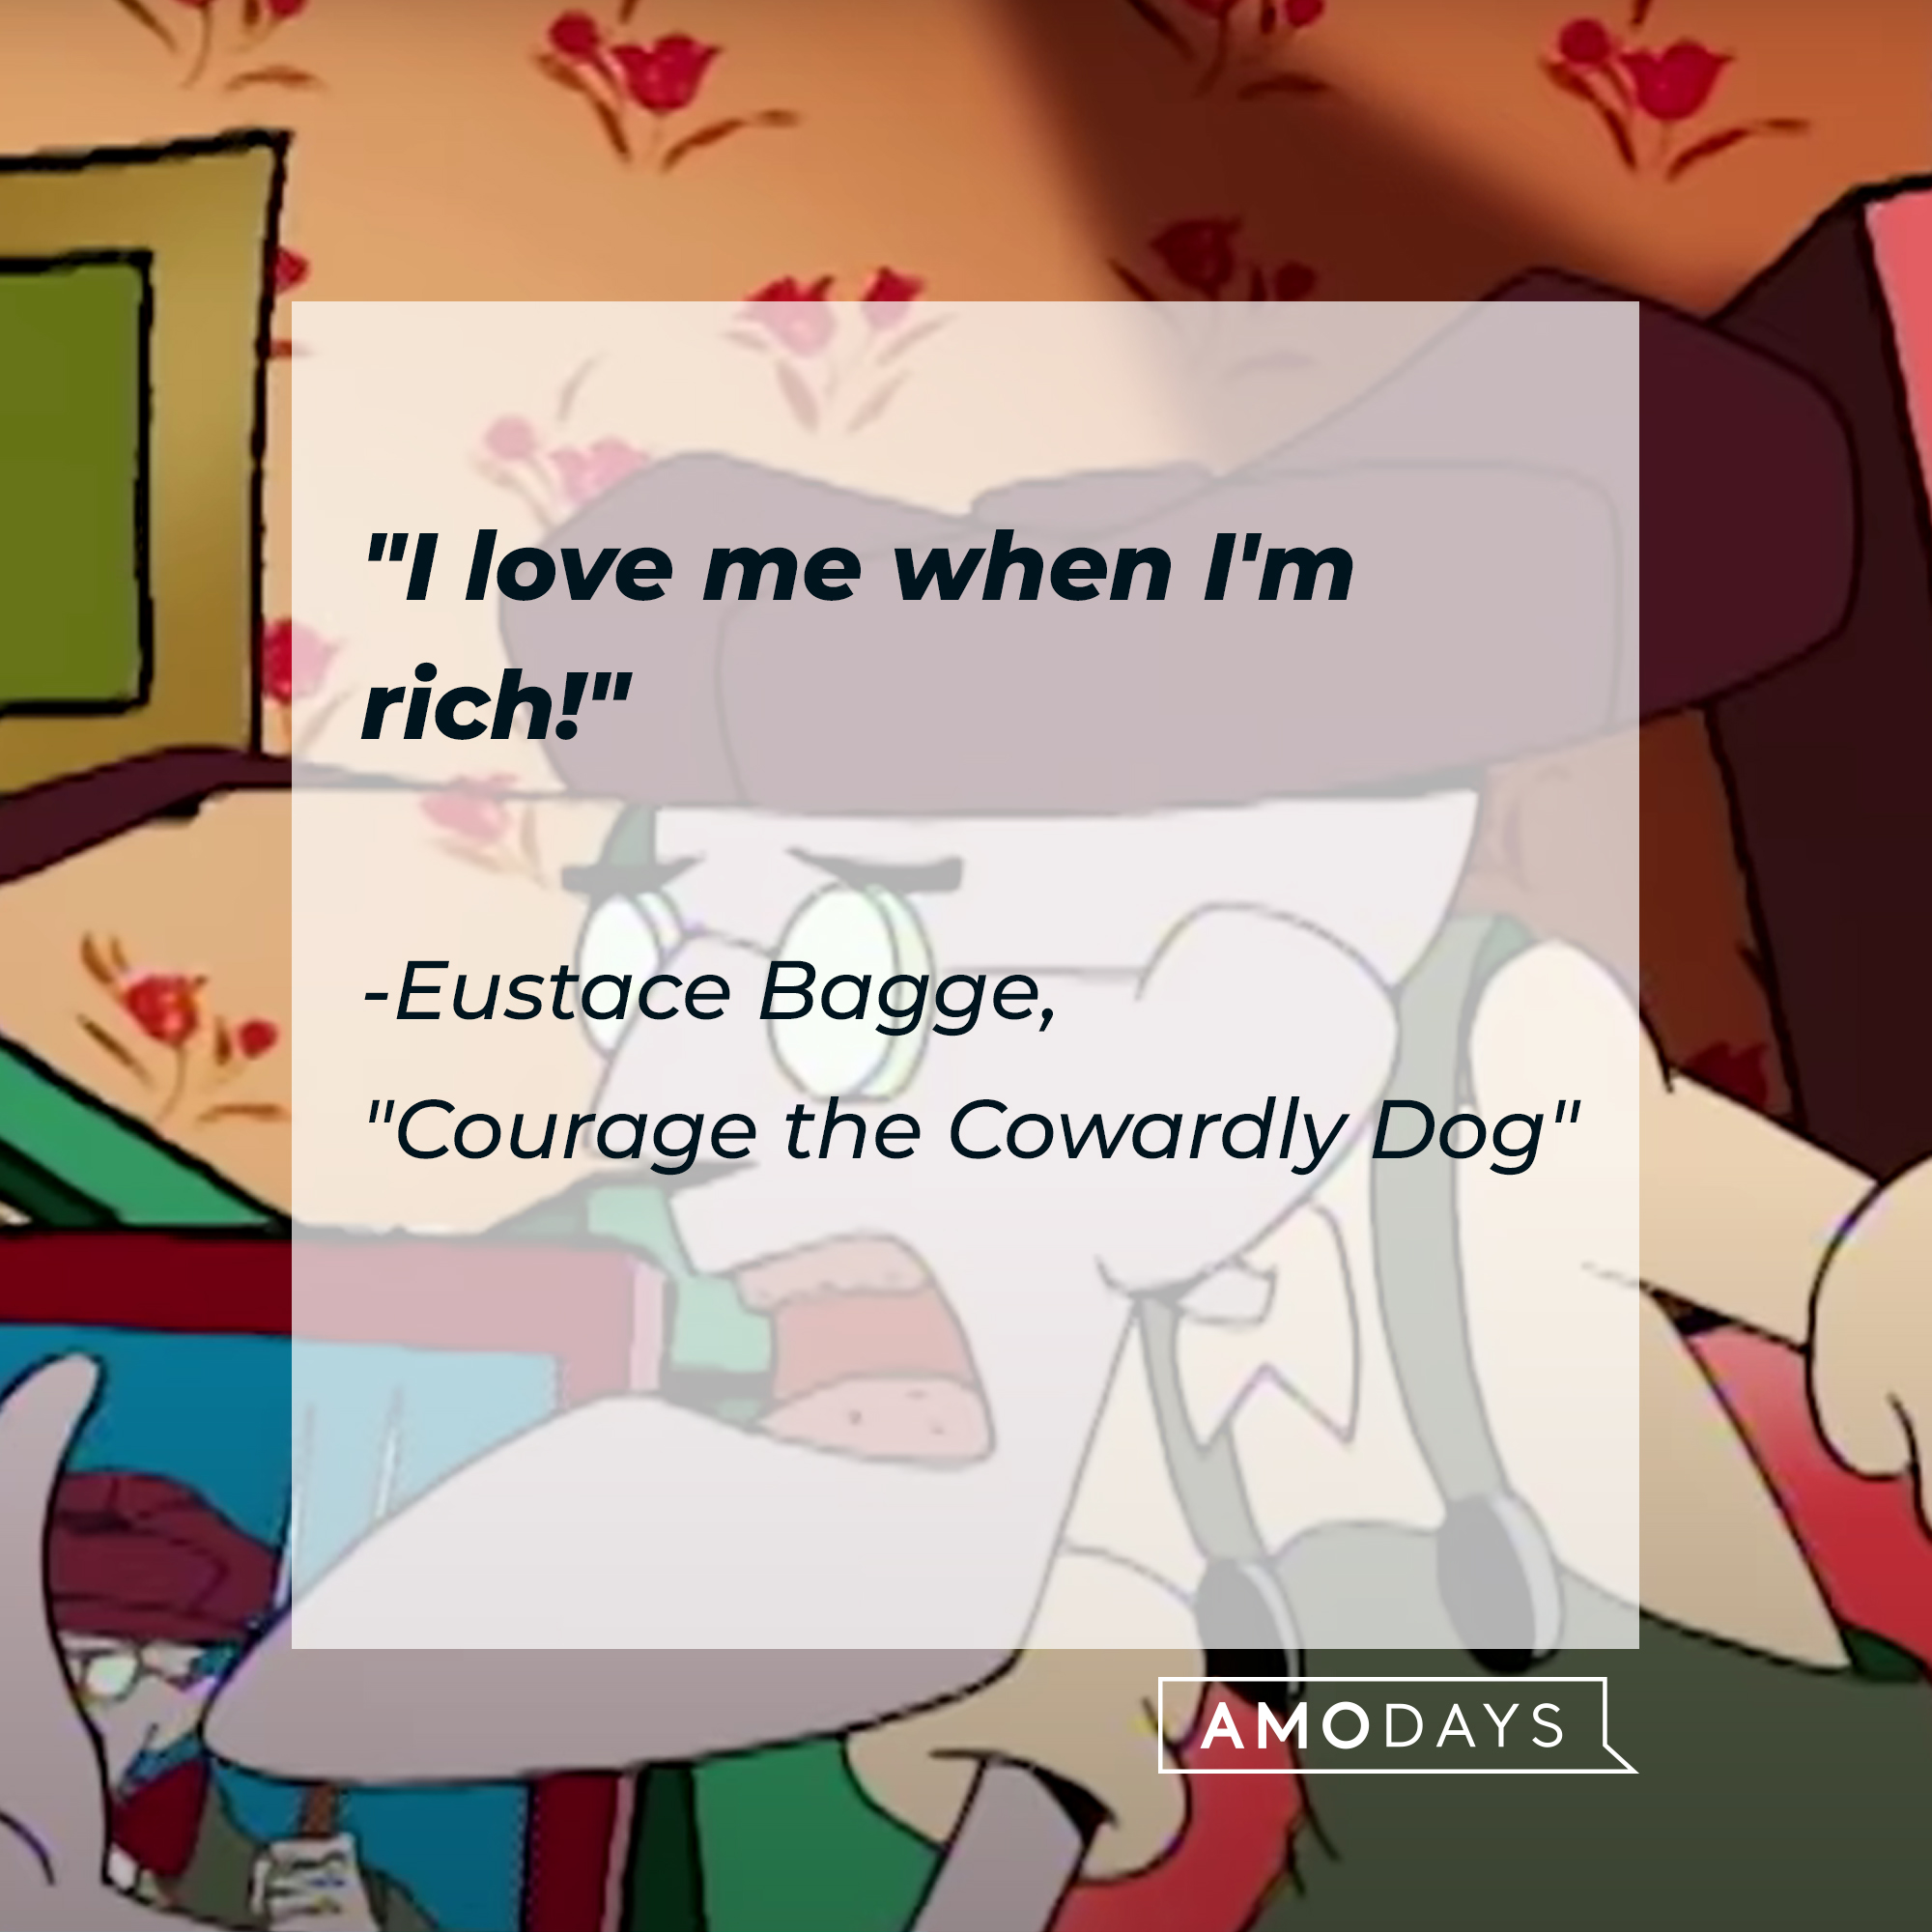 Eustace's quote: "I love me when I'm rich!" | Source: Facebook.com/CartoonNetwork